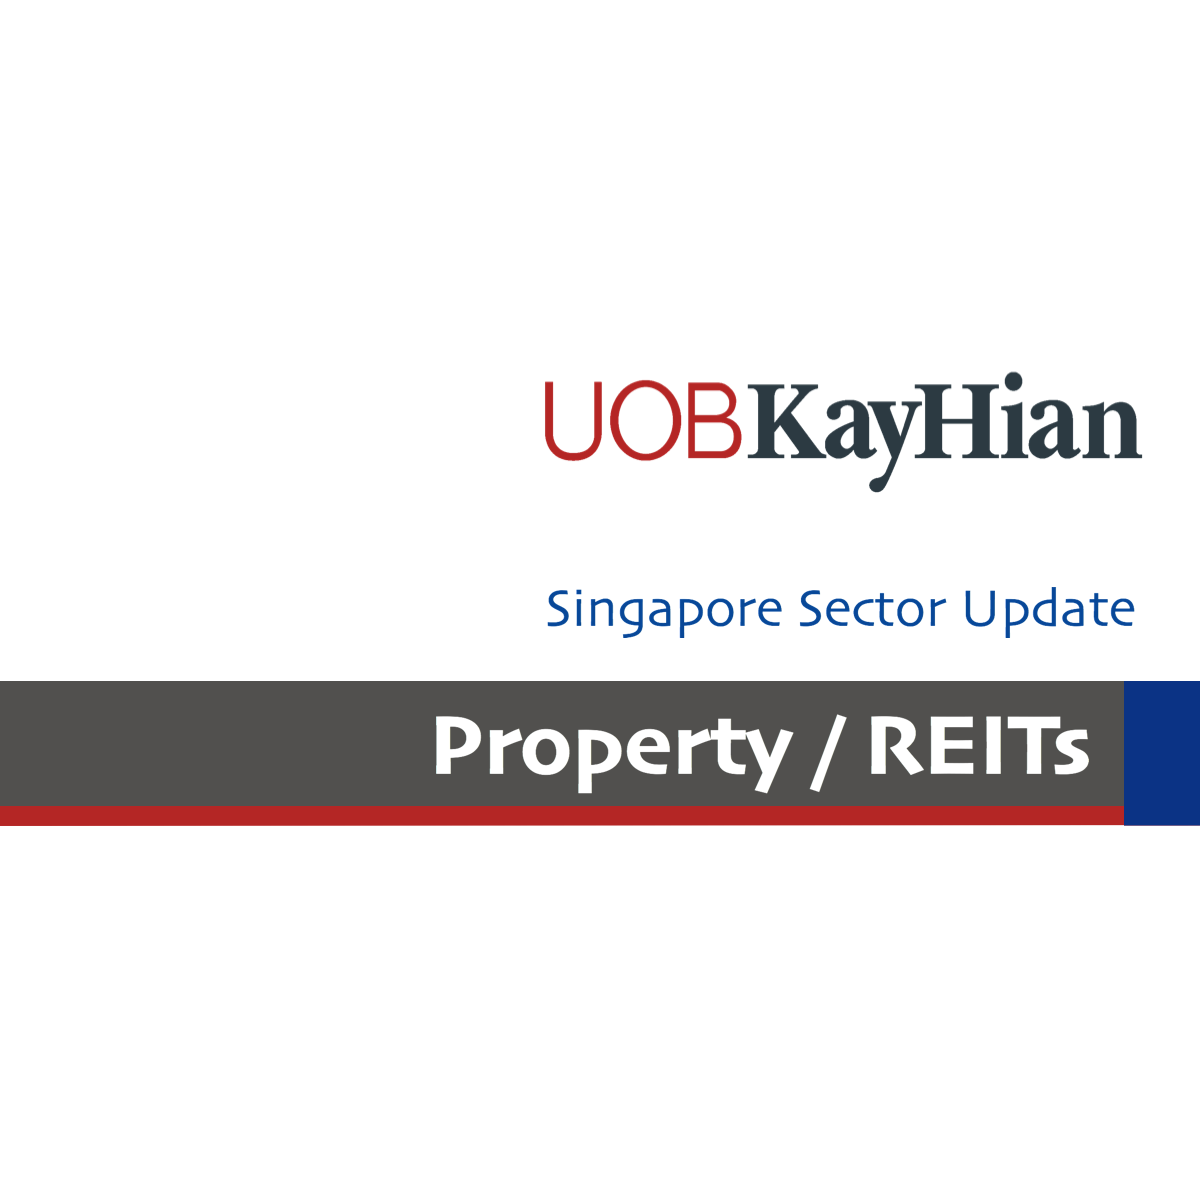 Singapore REITs - UOB Kay Hian 2018-03-06: Proliferation Of REIT ETFs To Boost S-REITs